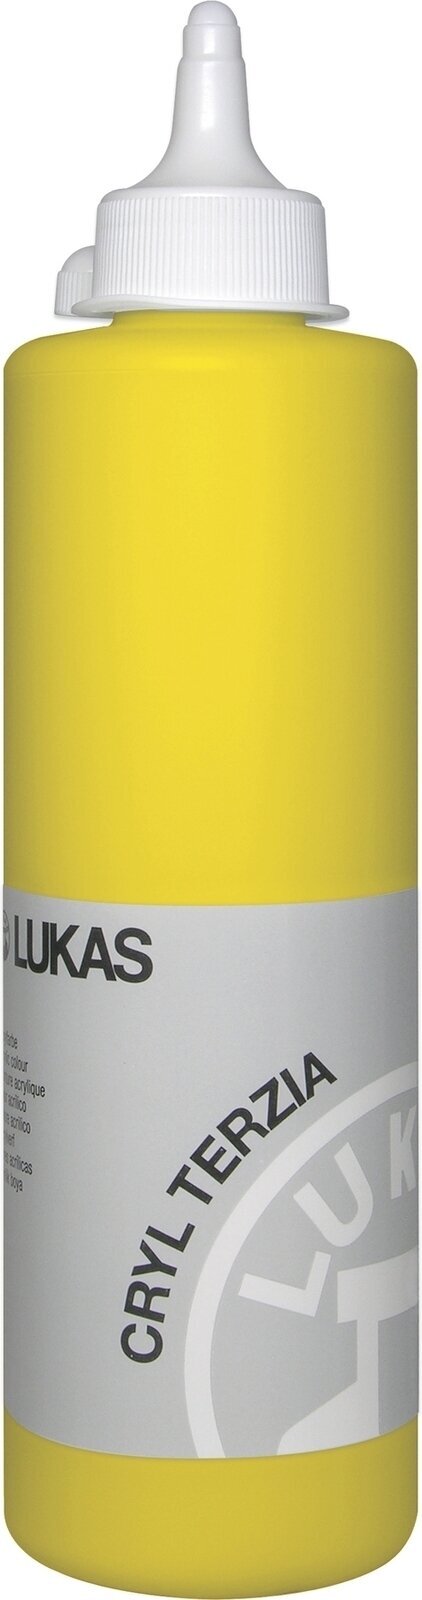 Acrylic Paint Lukas Cryl Terzia Acrylic Paint Plastic Bottle Acrylic Paint Primary Yellow 500 ml 1 pc